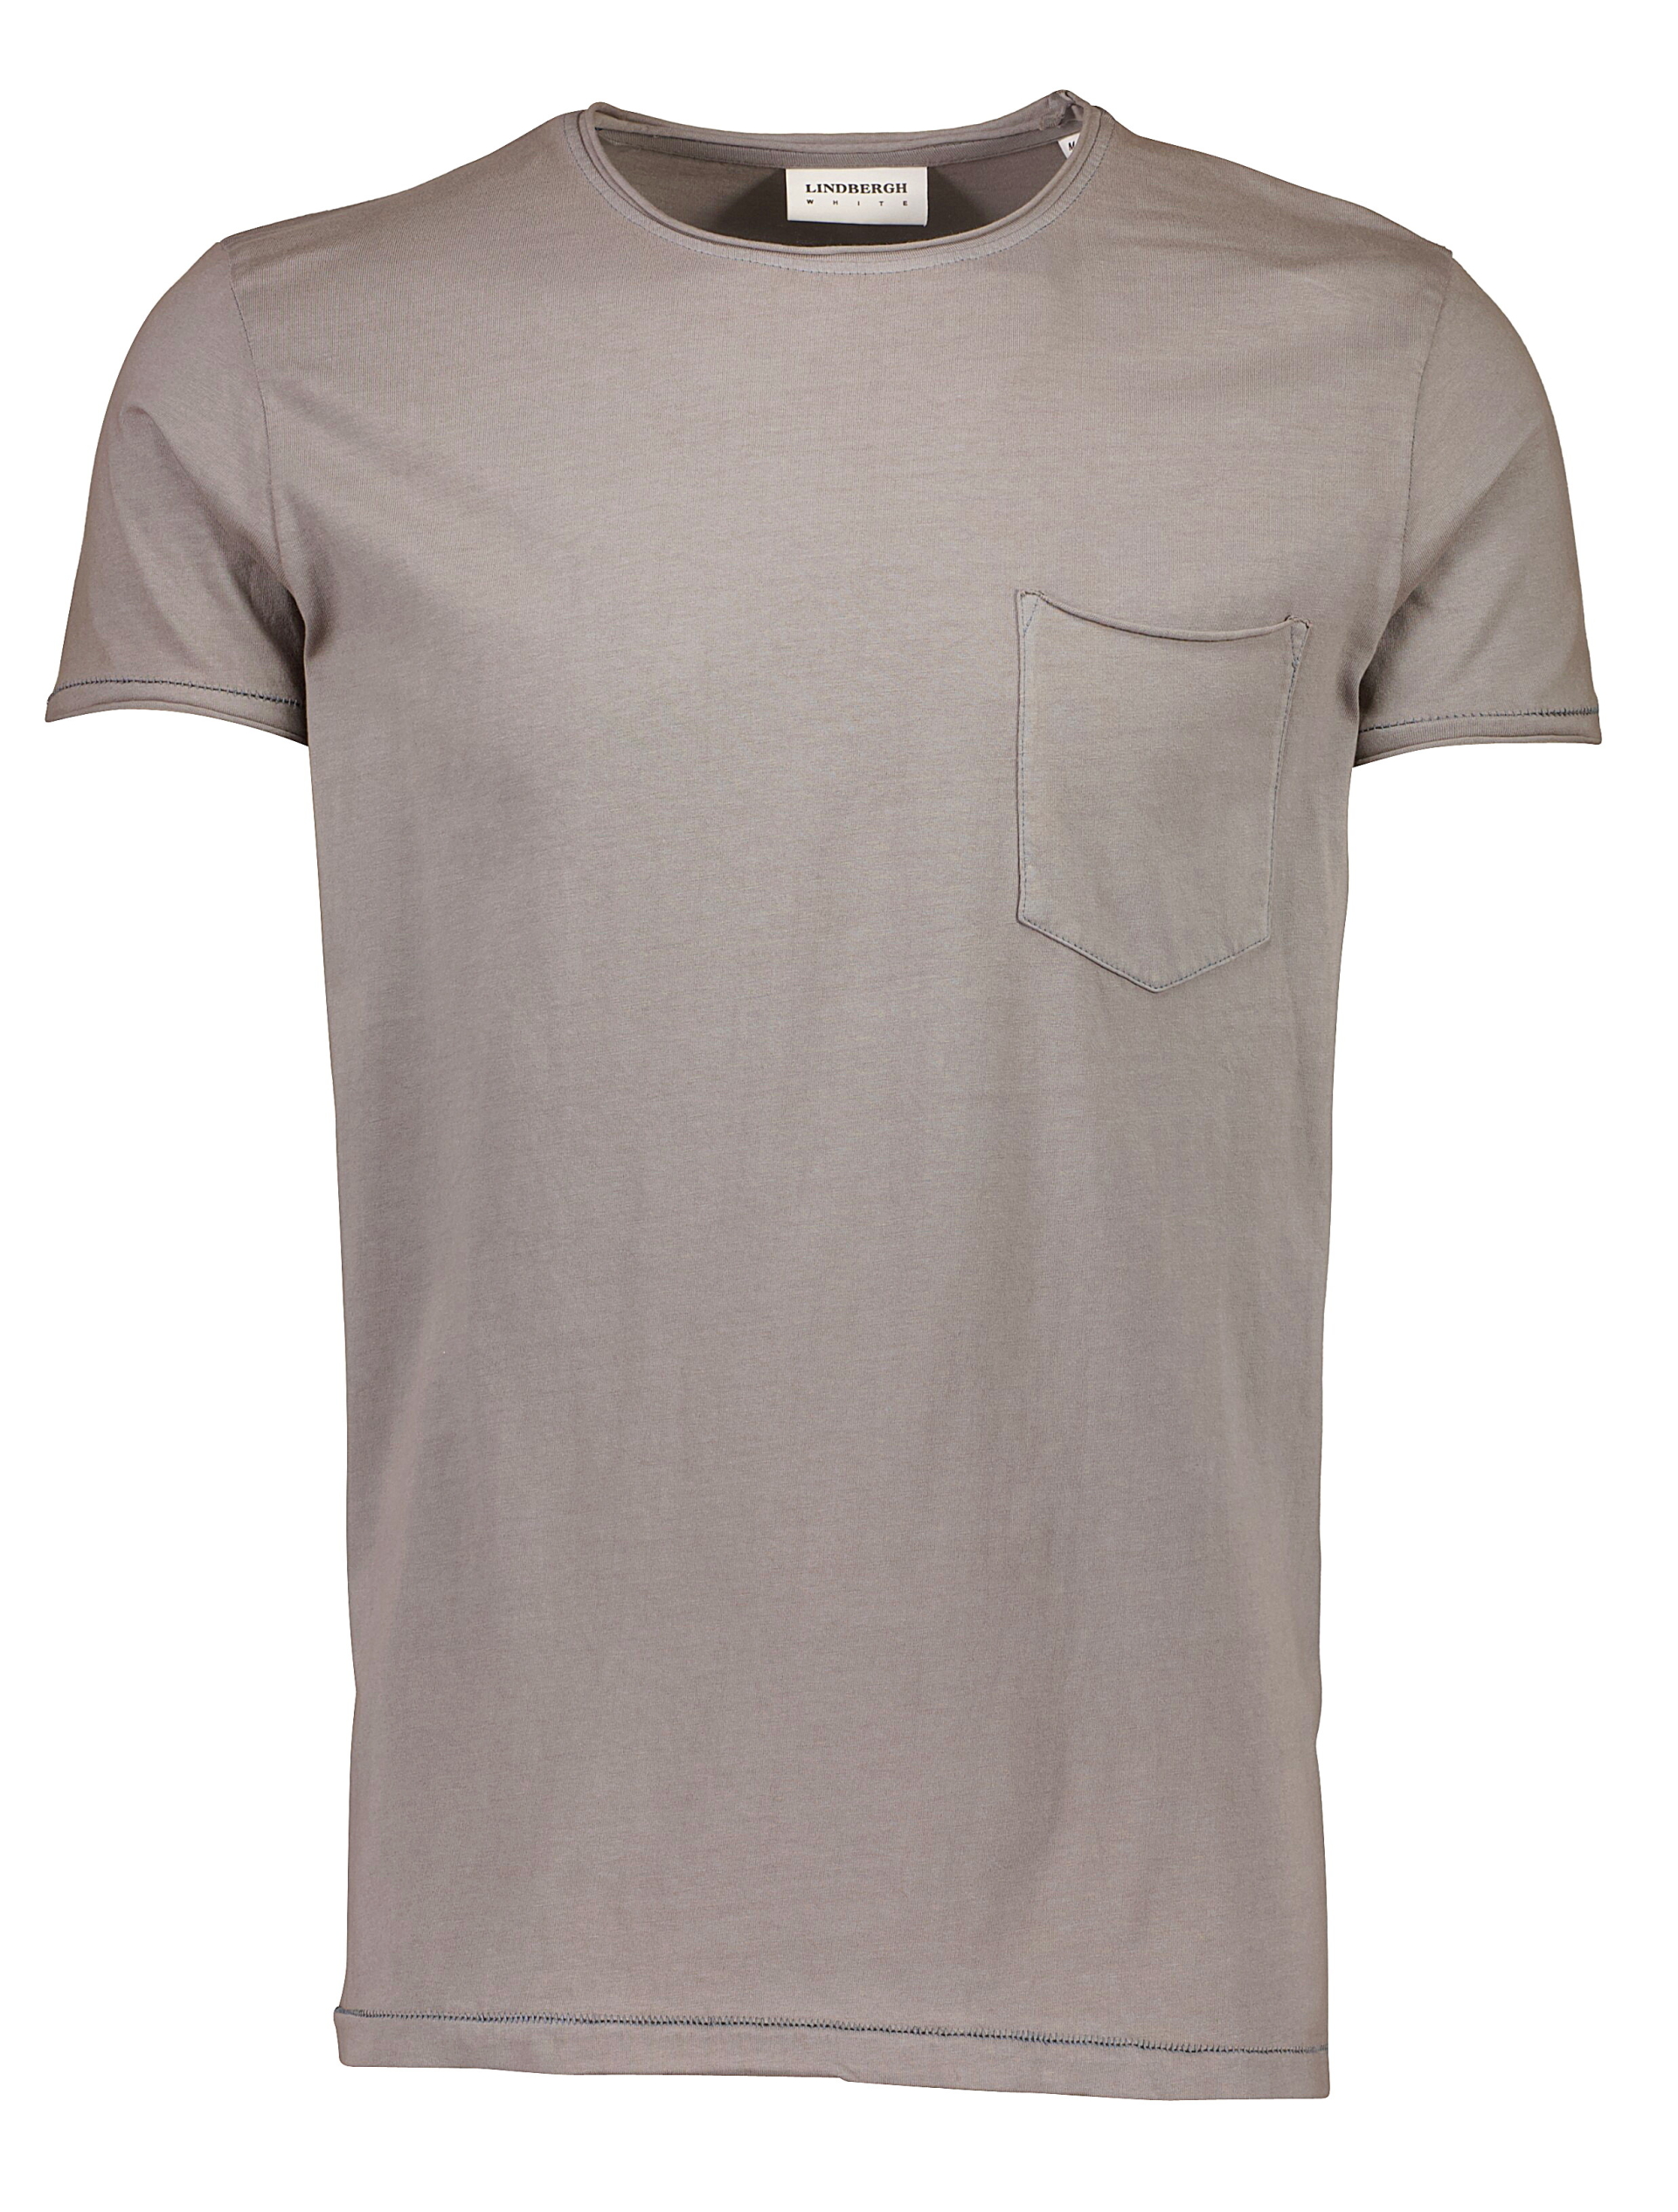 Lindbergh T-shirt grå / grey